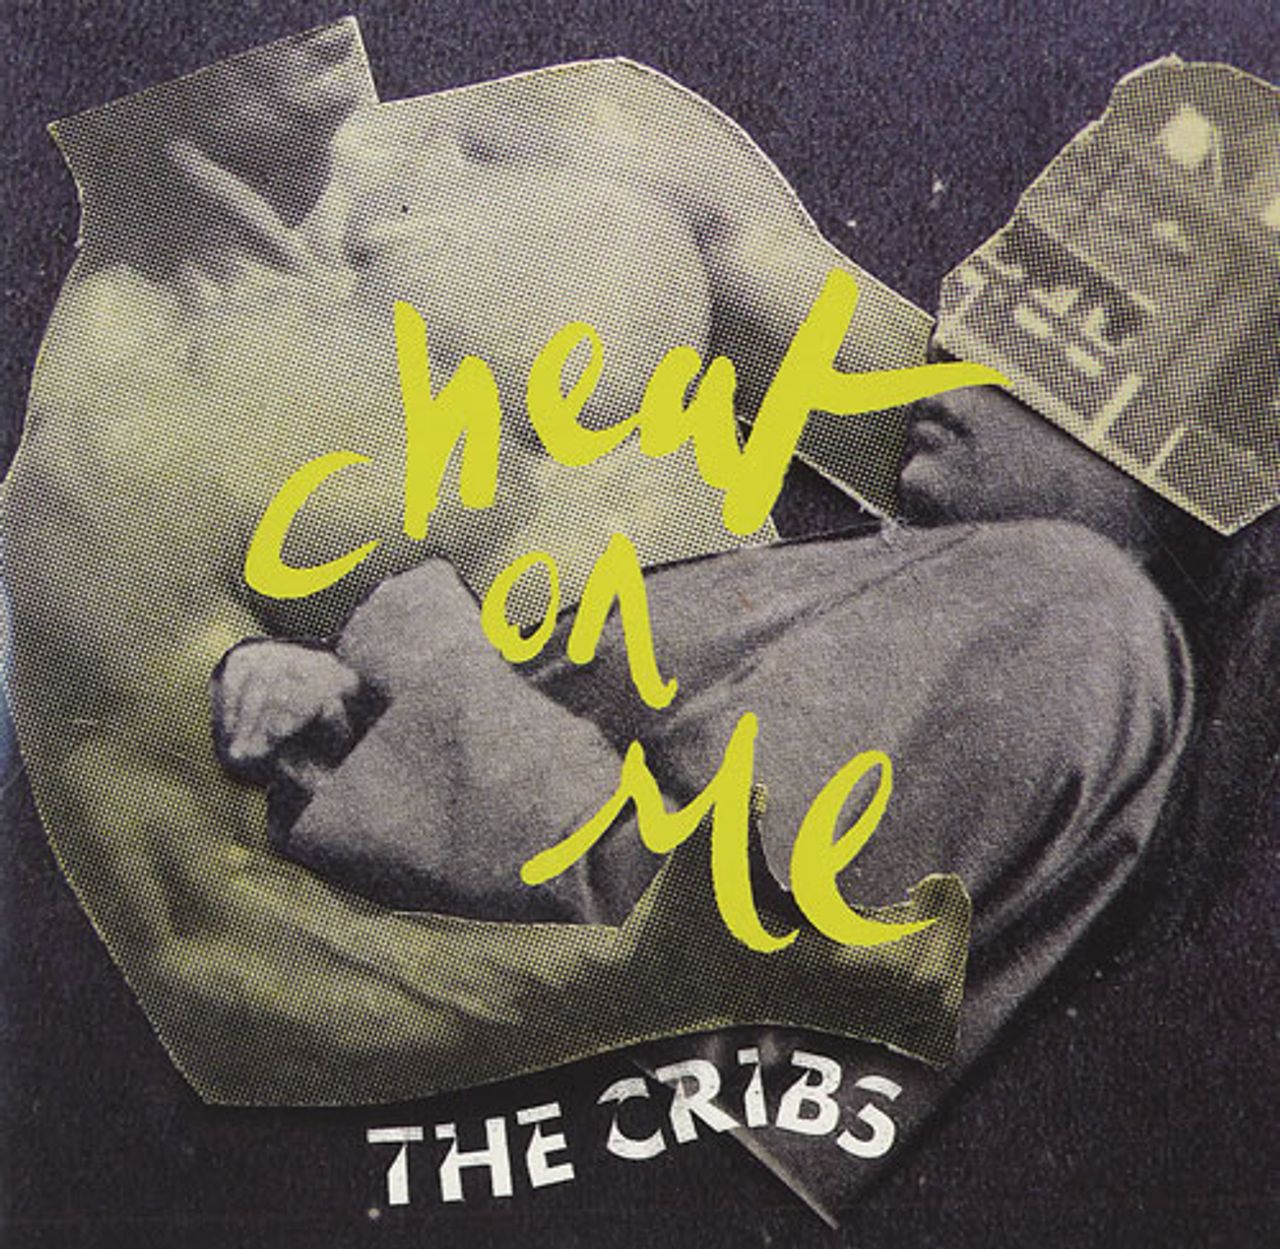 The Cribs Cheat On Me UK Promo CD single (CD5 / 5") WEBB221SCDP